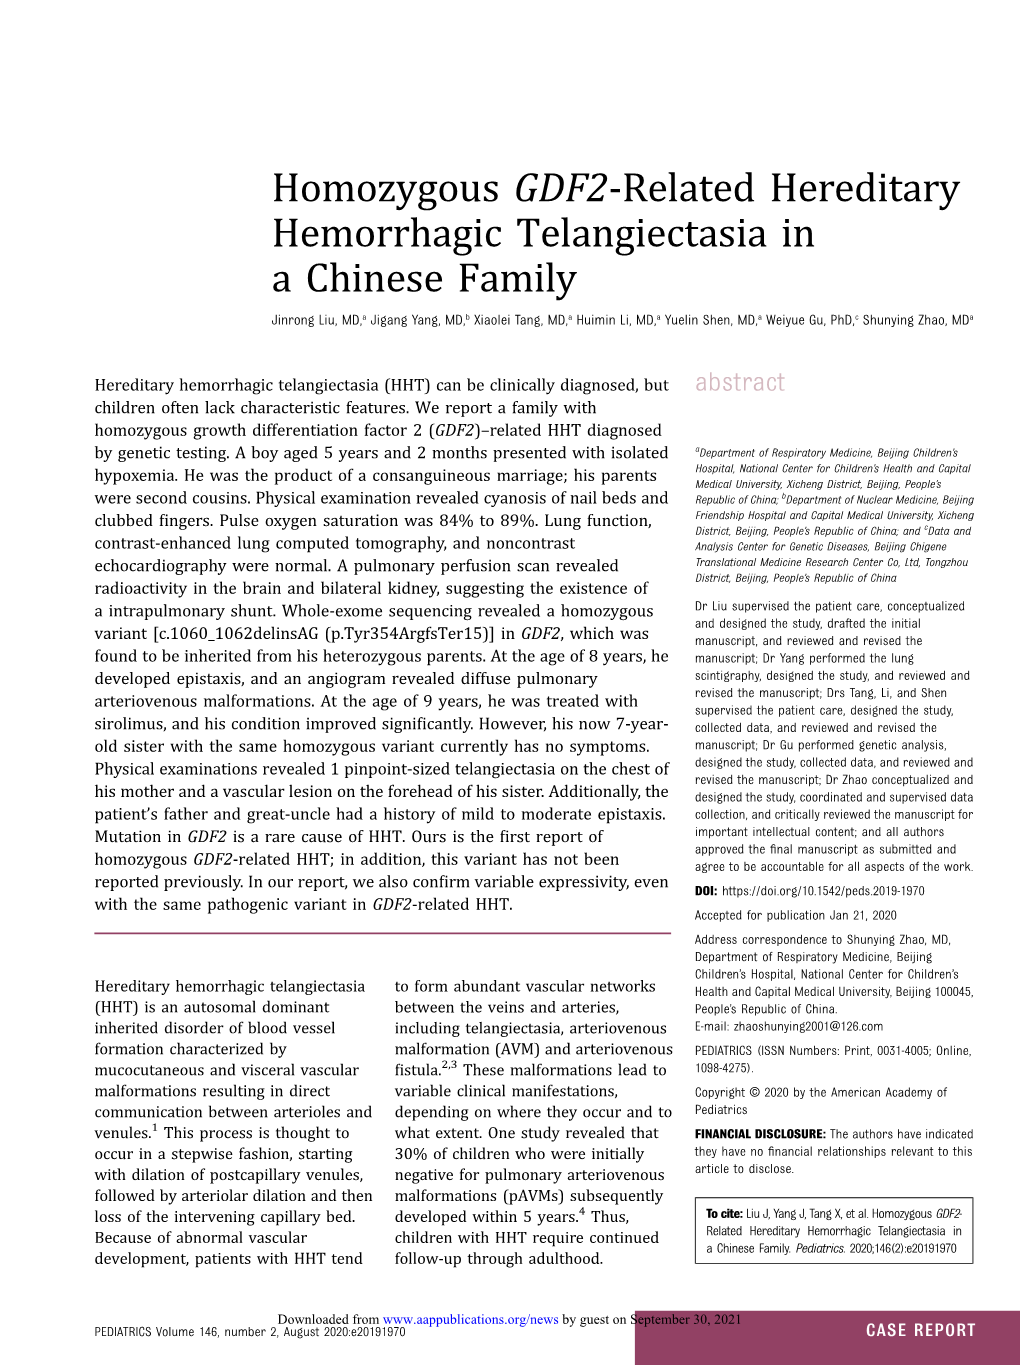 Homozygous GDF2-Related Hereditary Hemorrhagic Telangiectasia in a Chinese Family